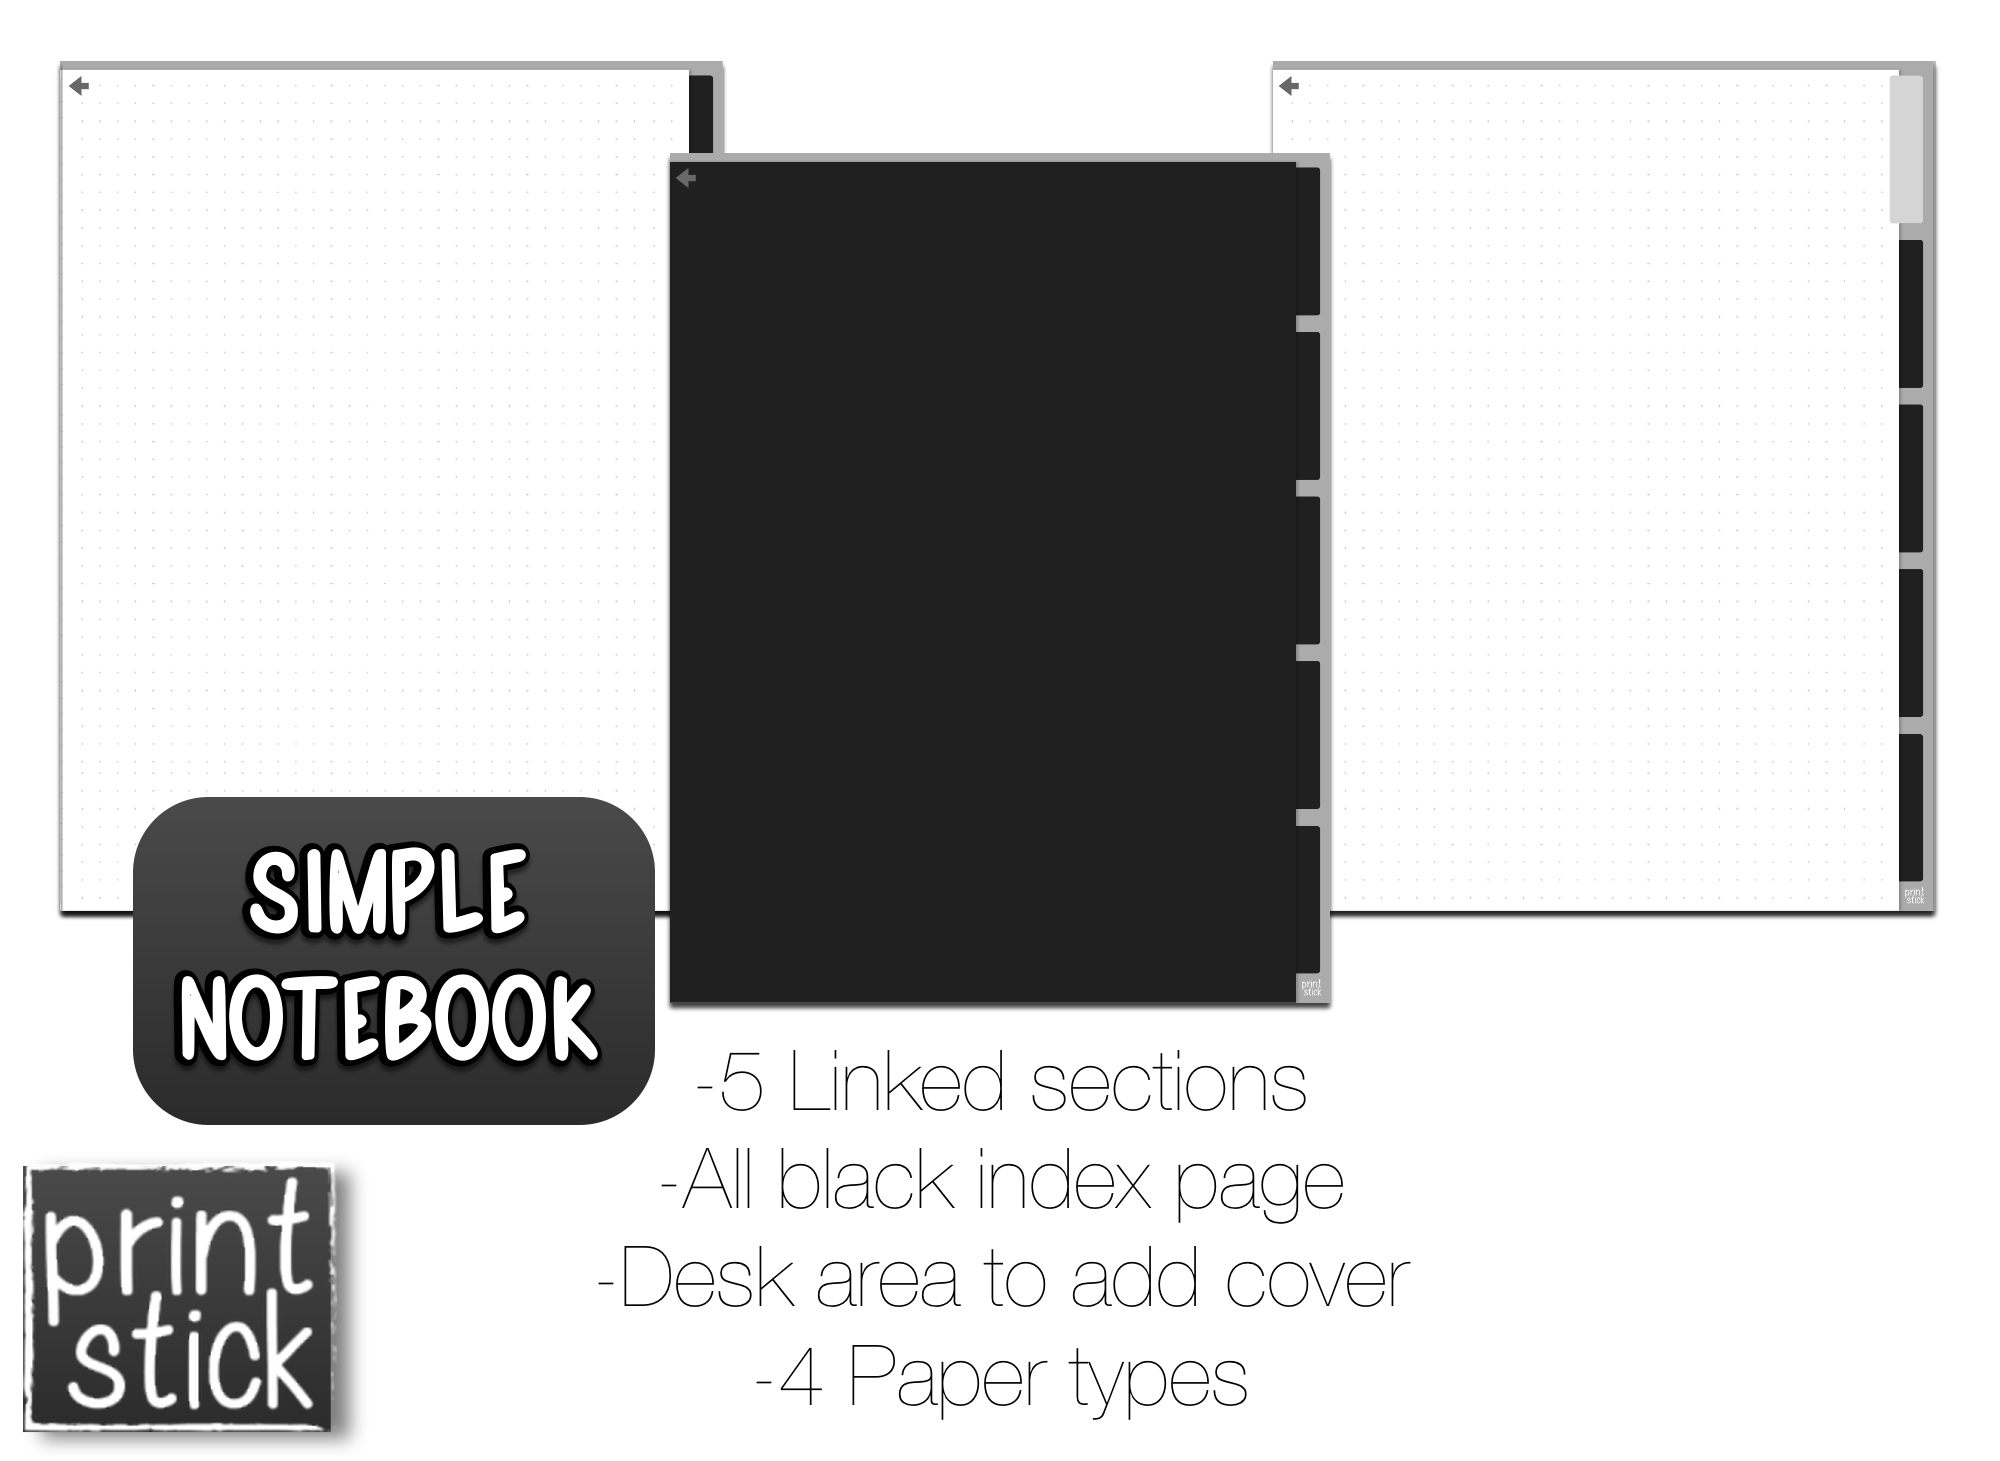 Simple Notebook - Print Stick